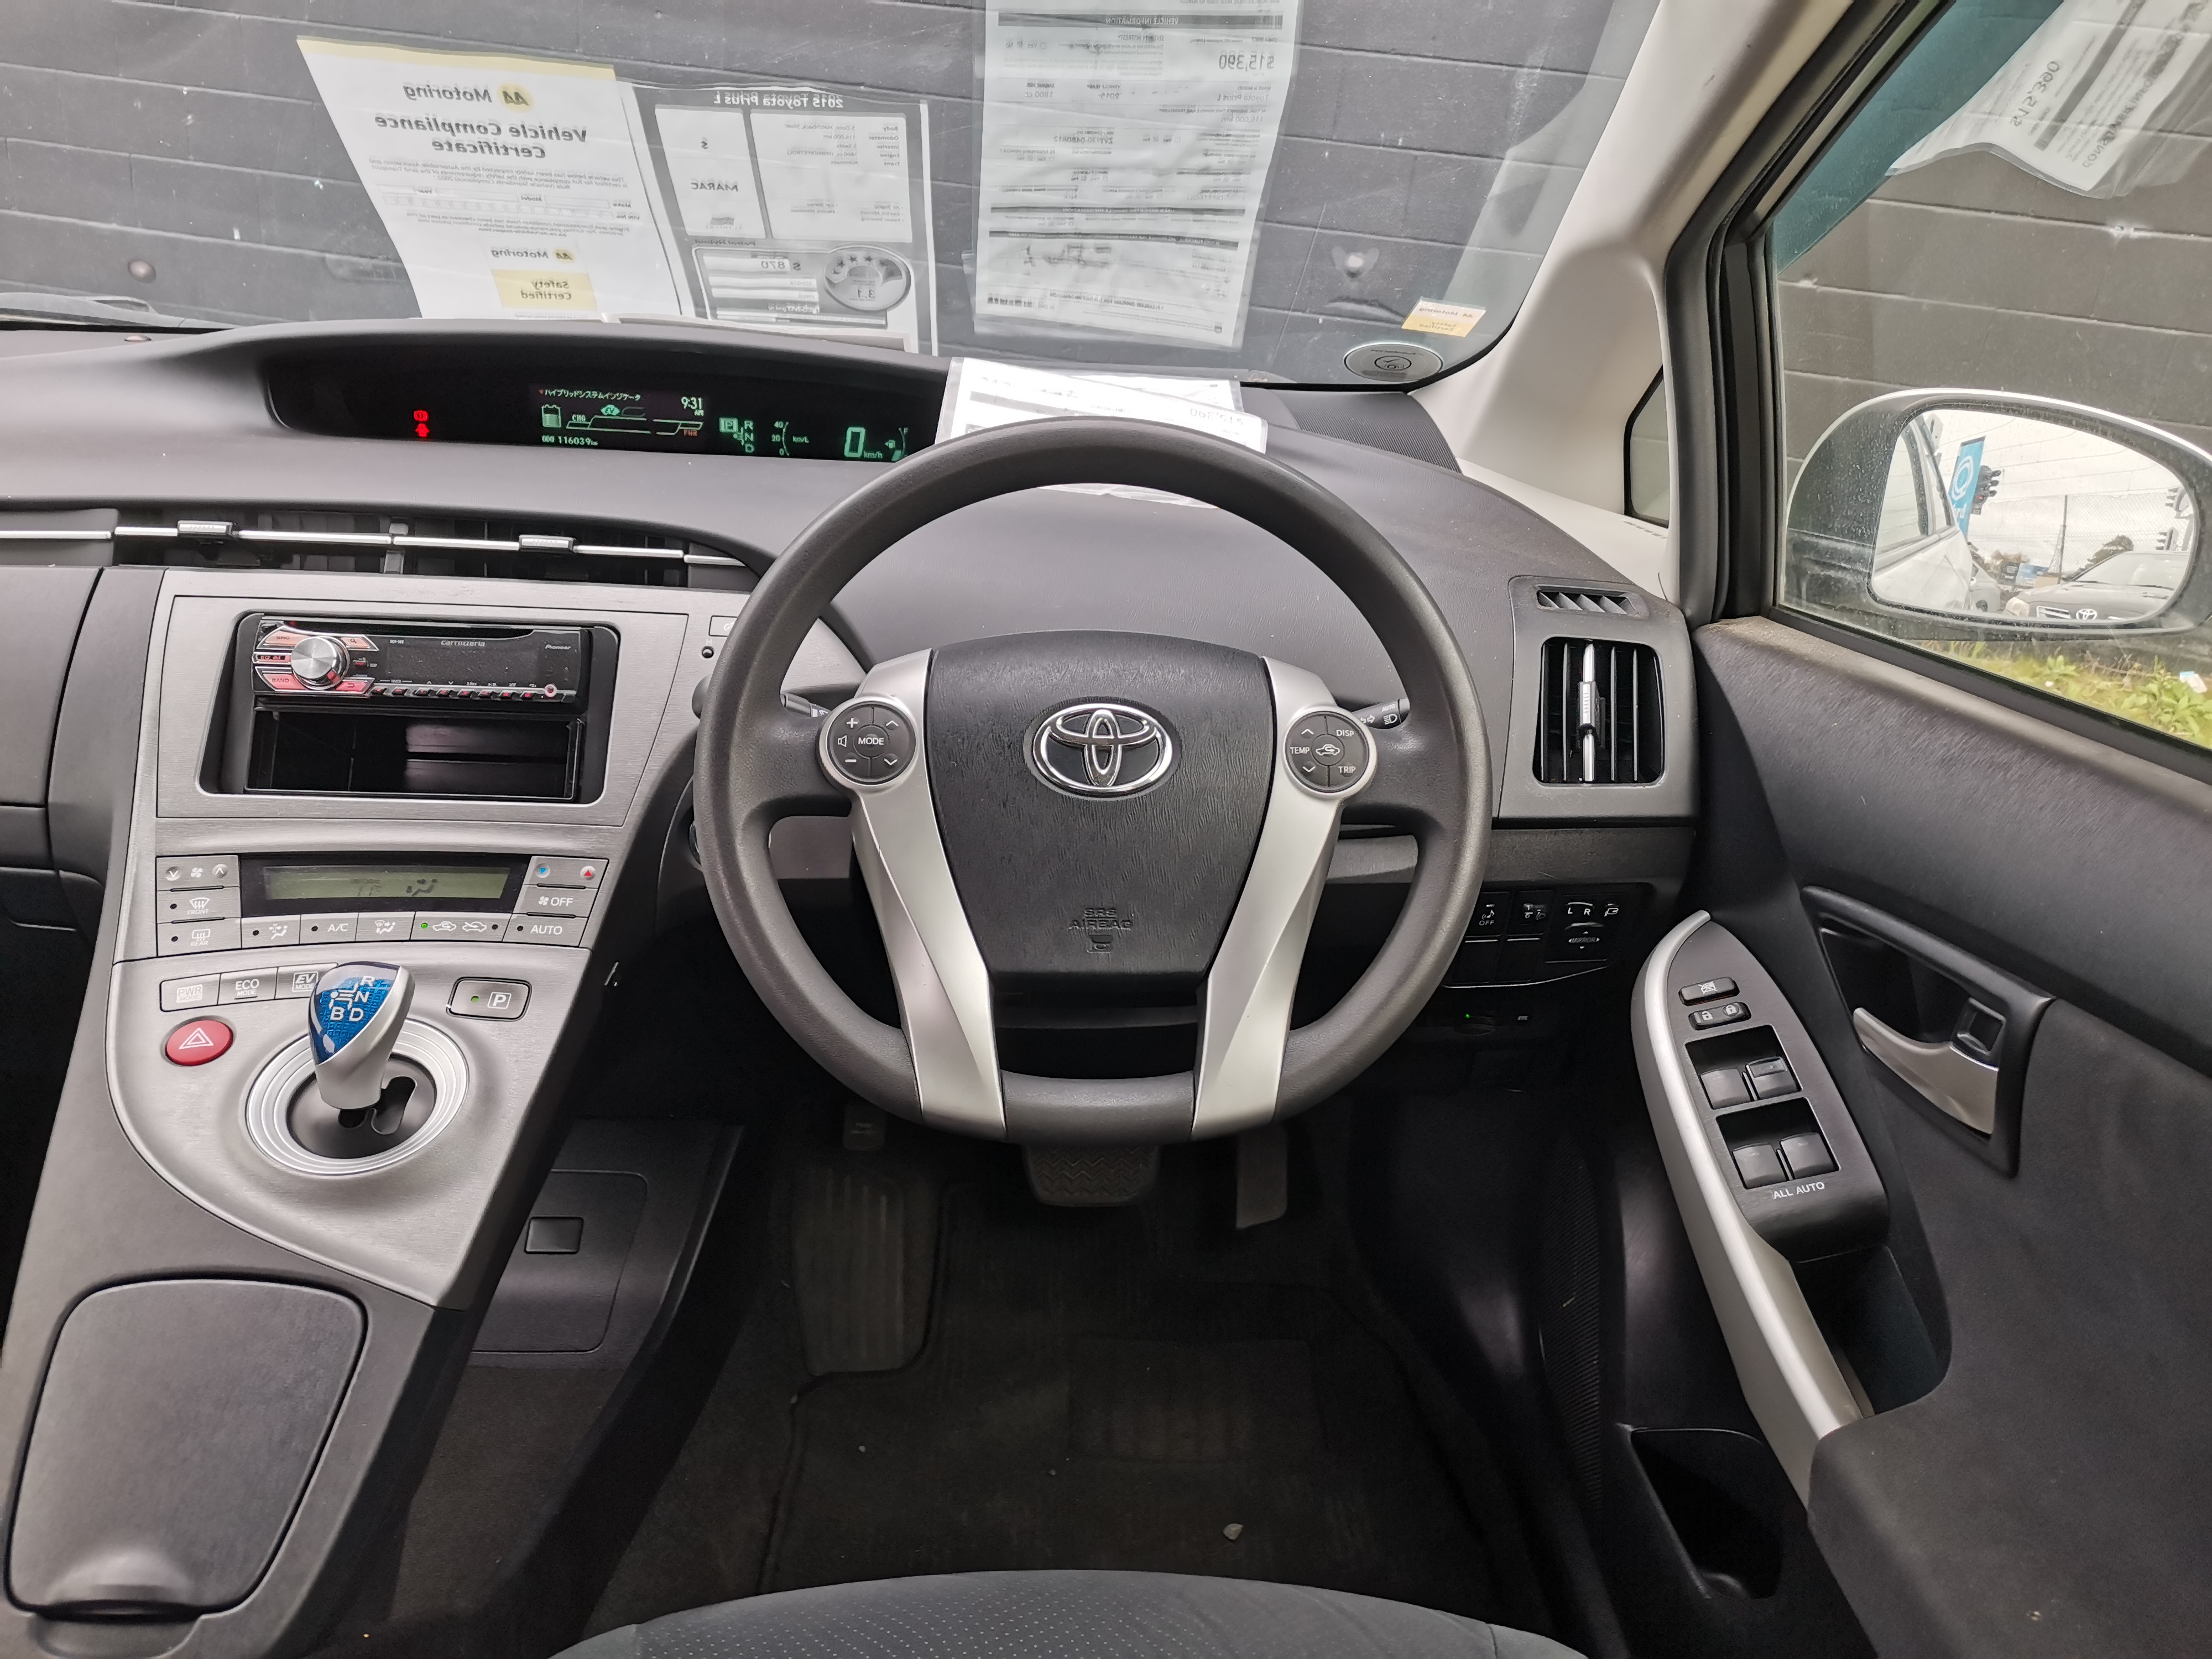 Toyota Prius 2015 Image 15